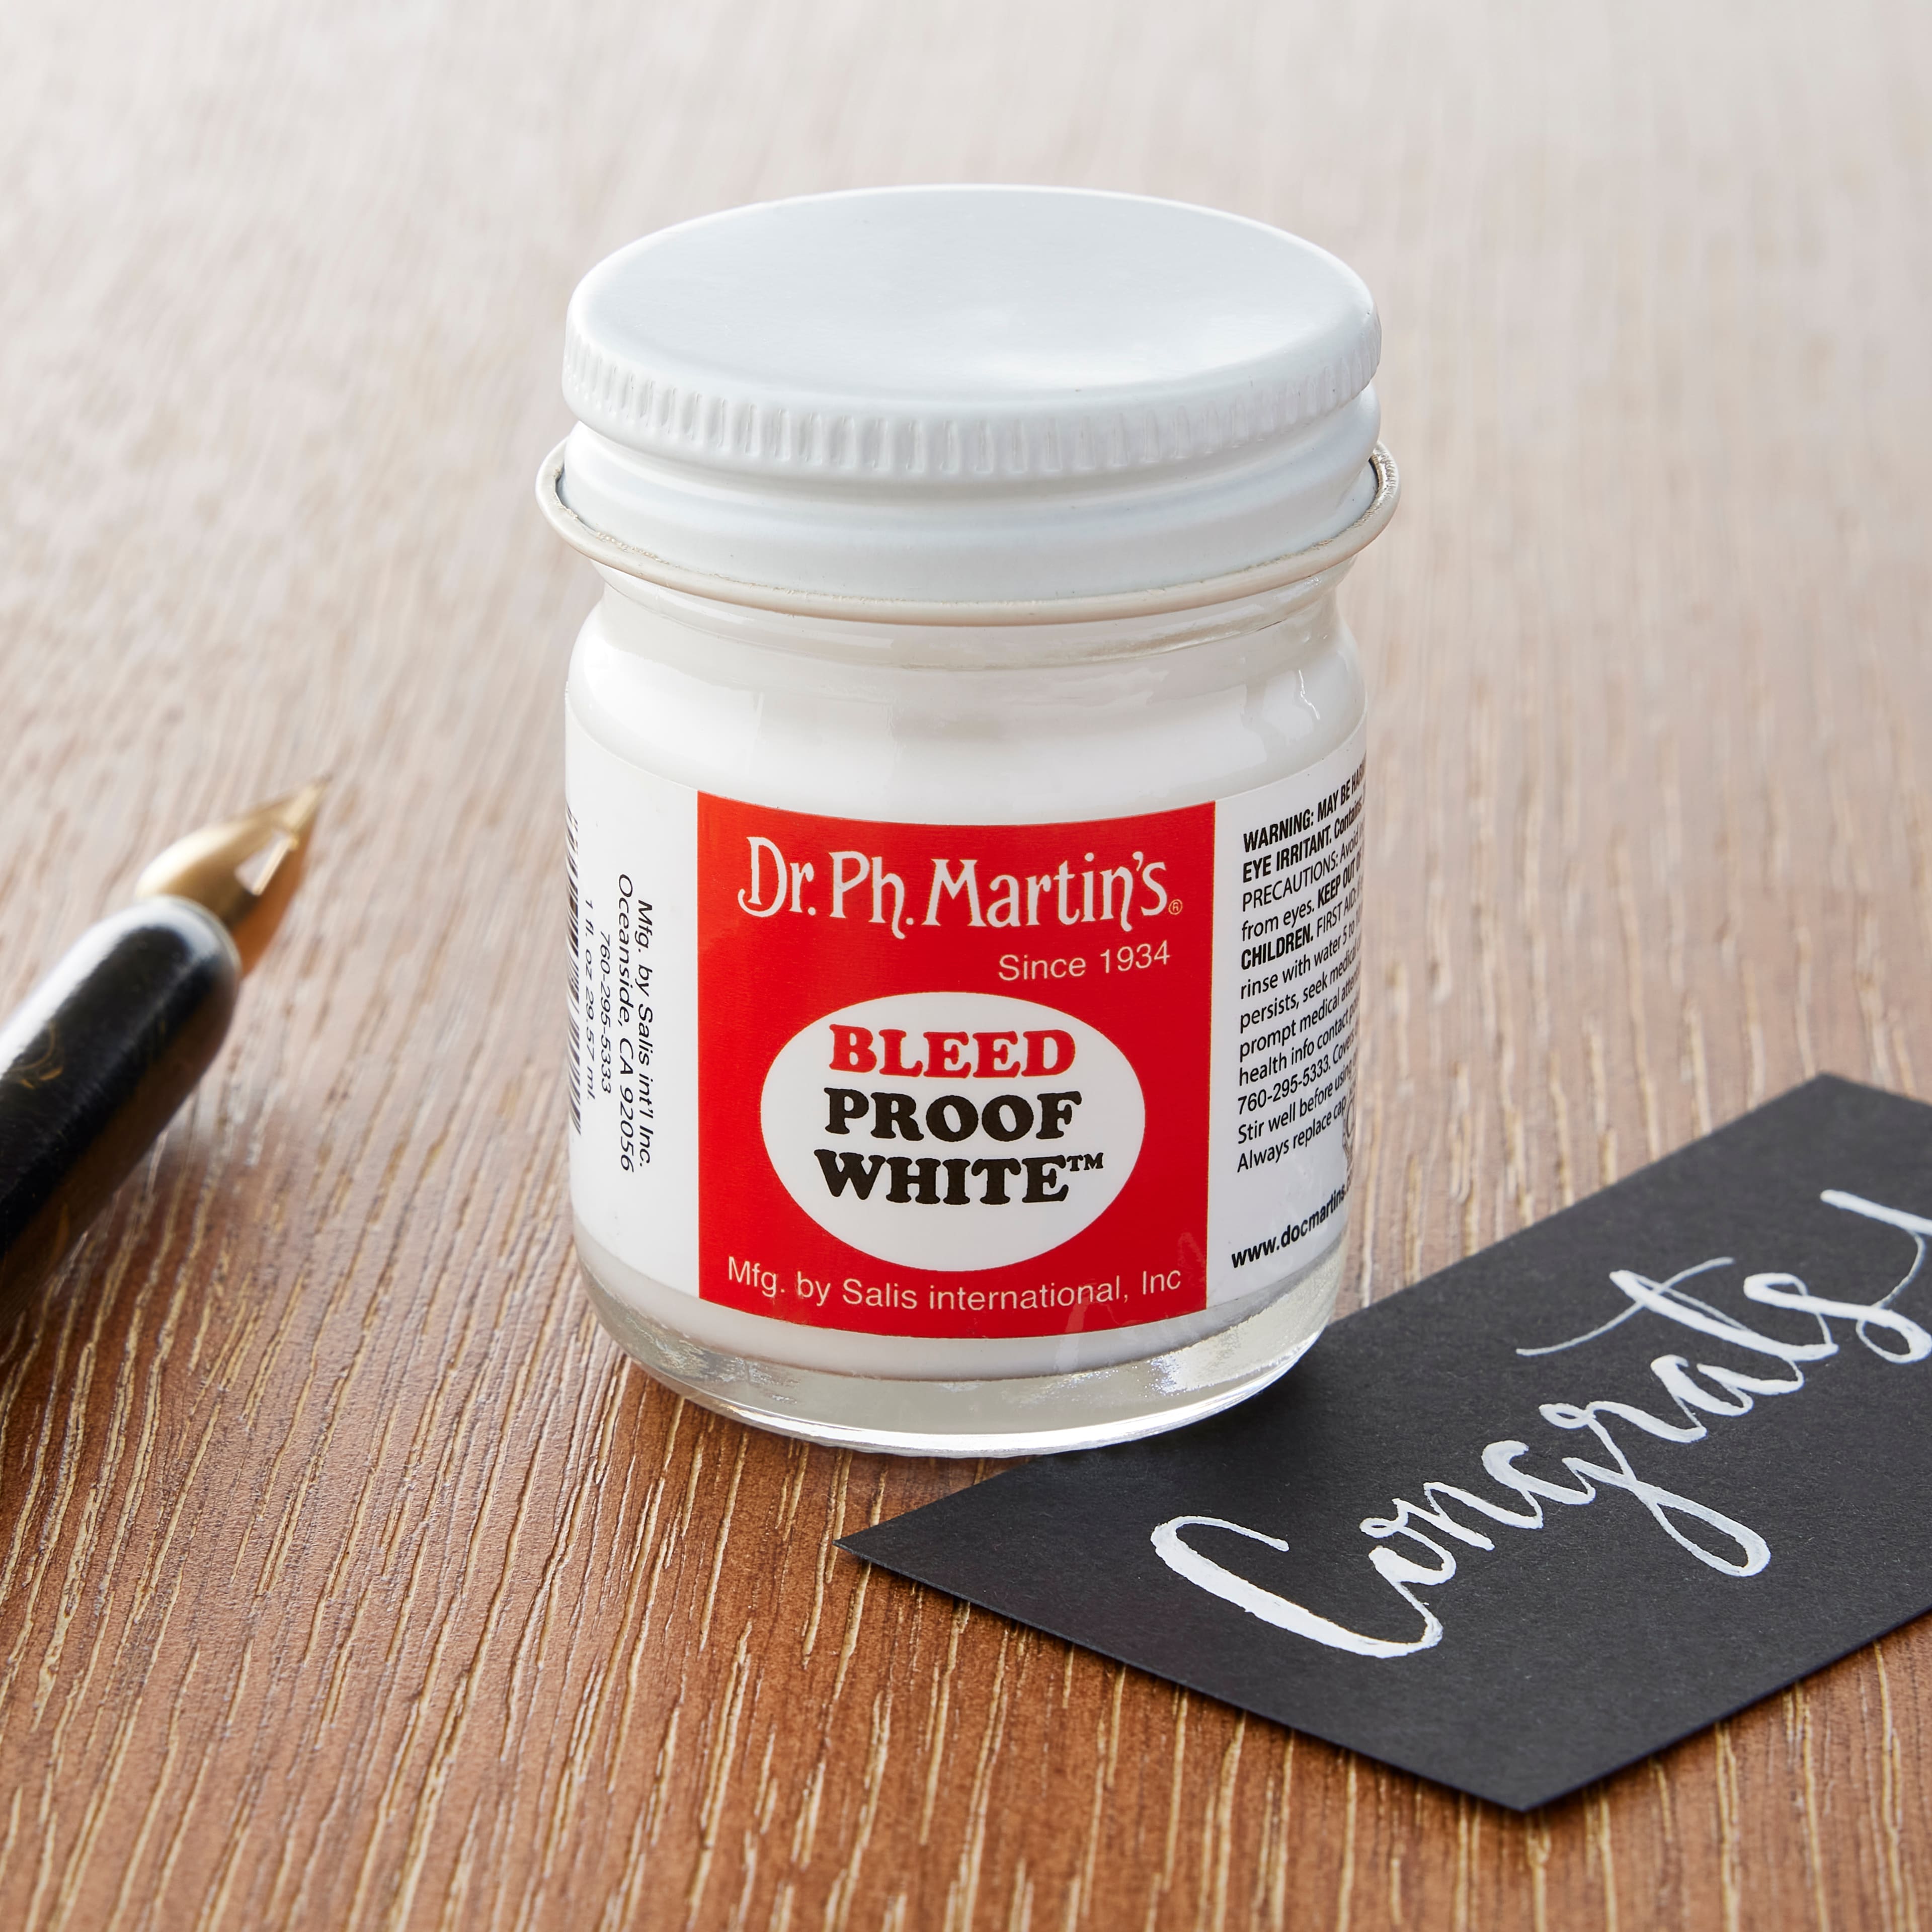 Dr. Ph. Martin's Bleedproof White by BeadtleSweet